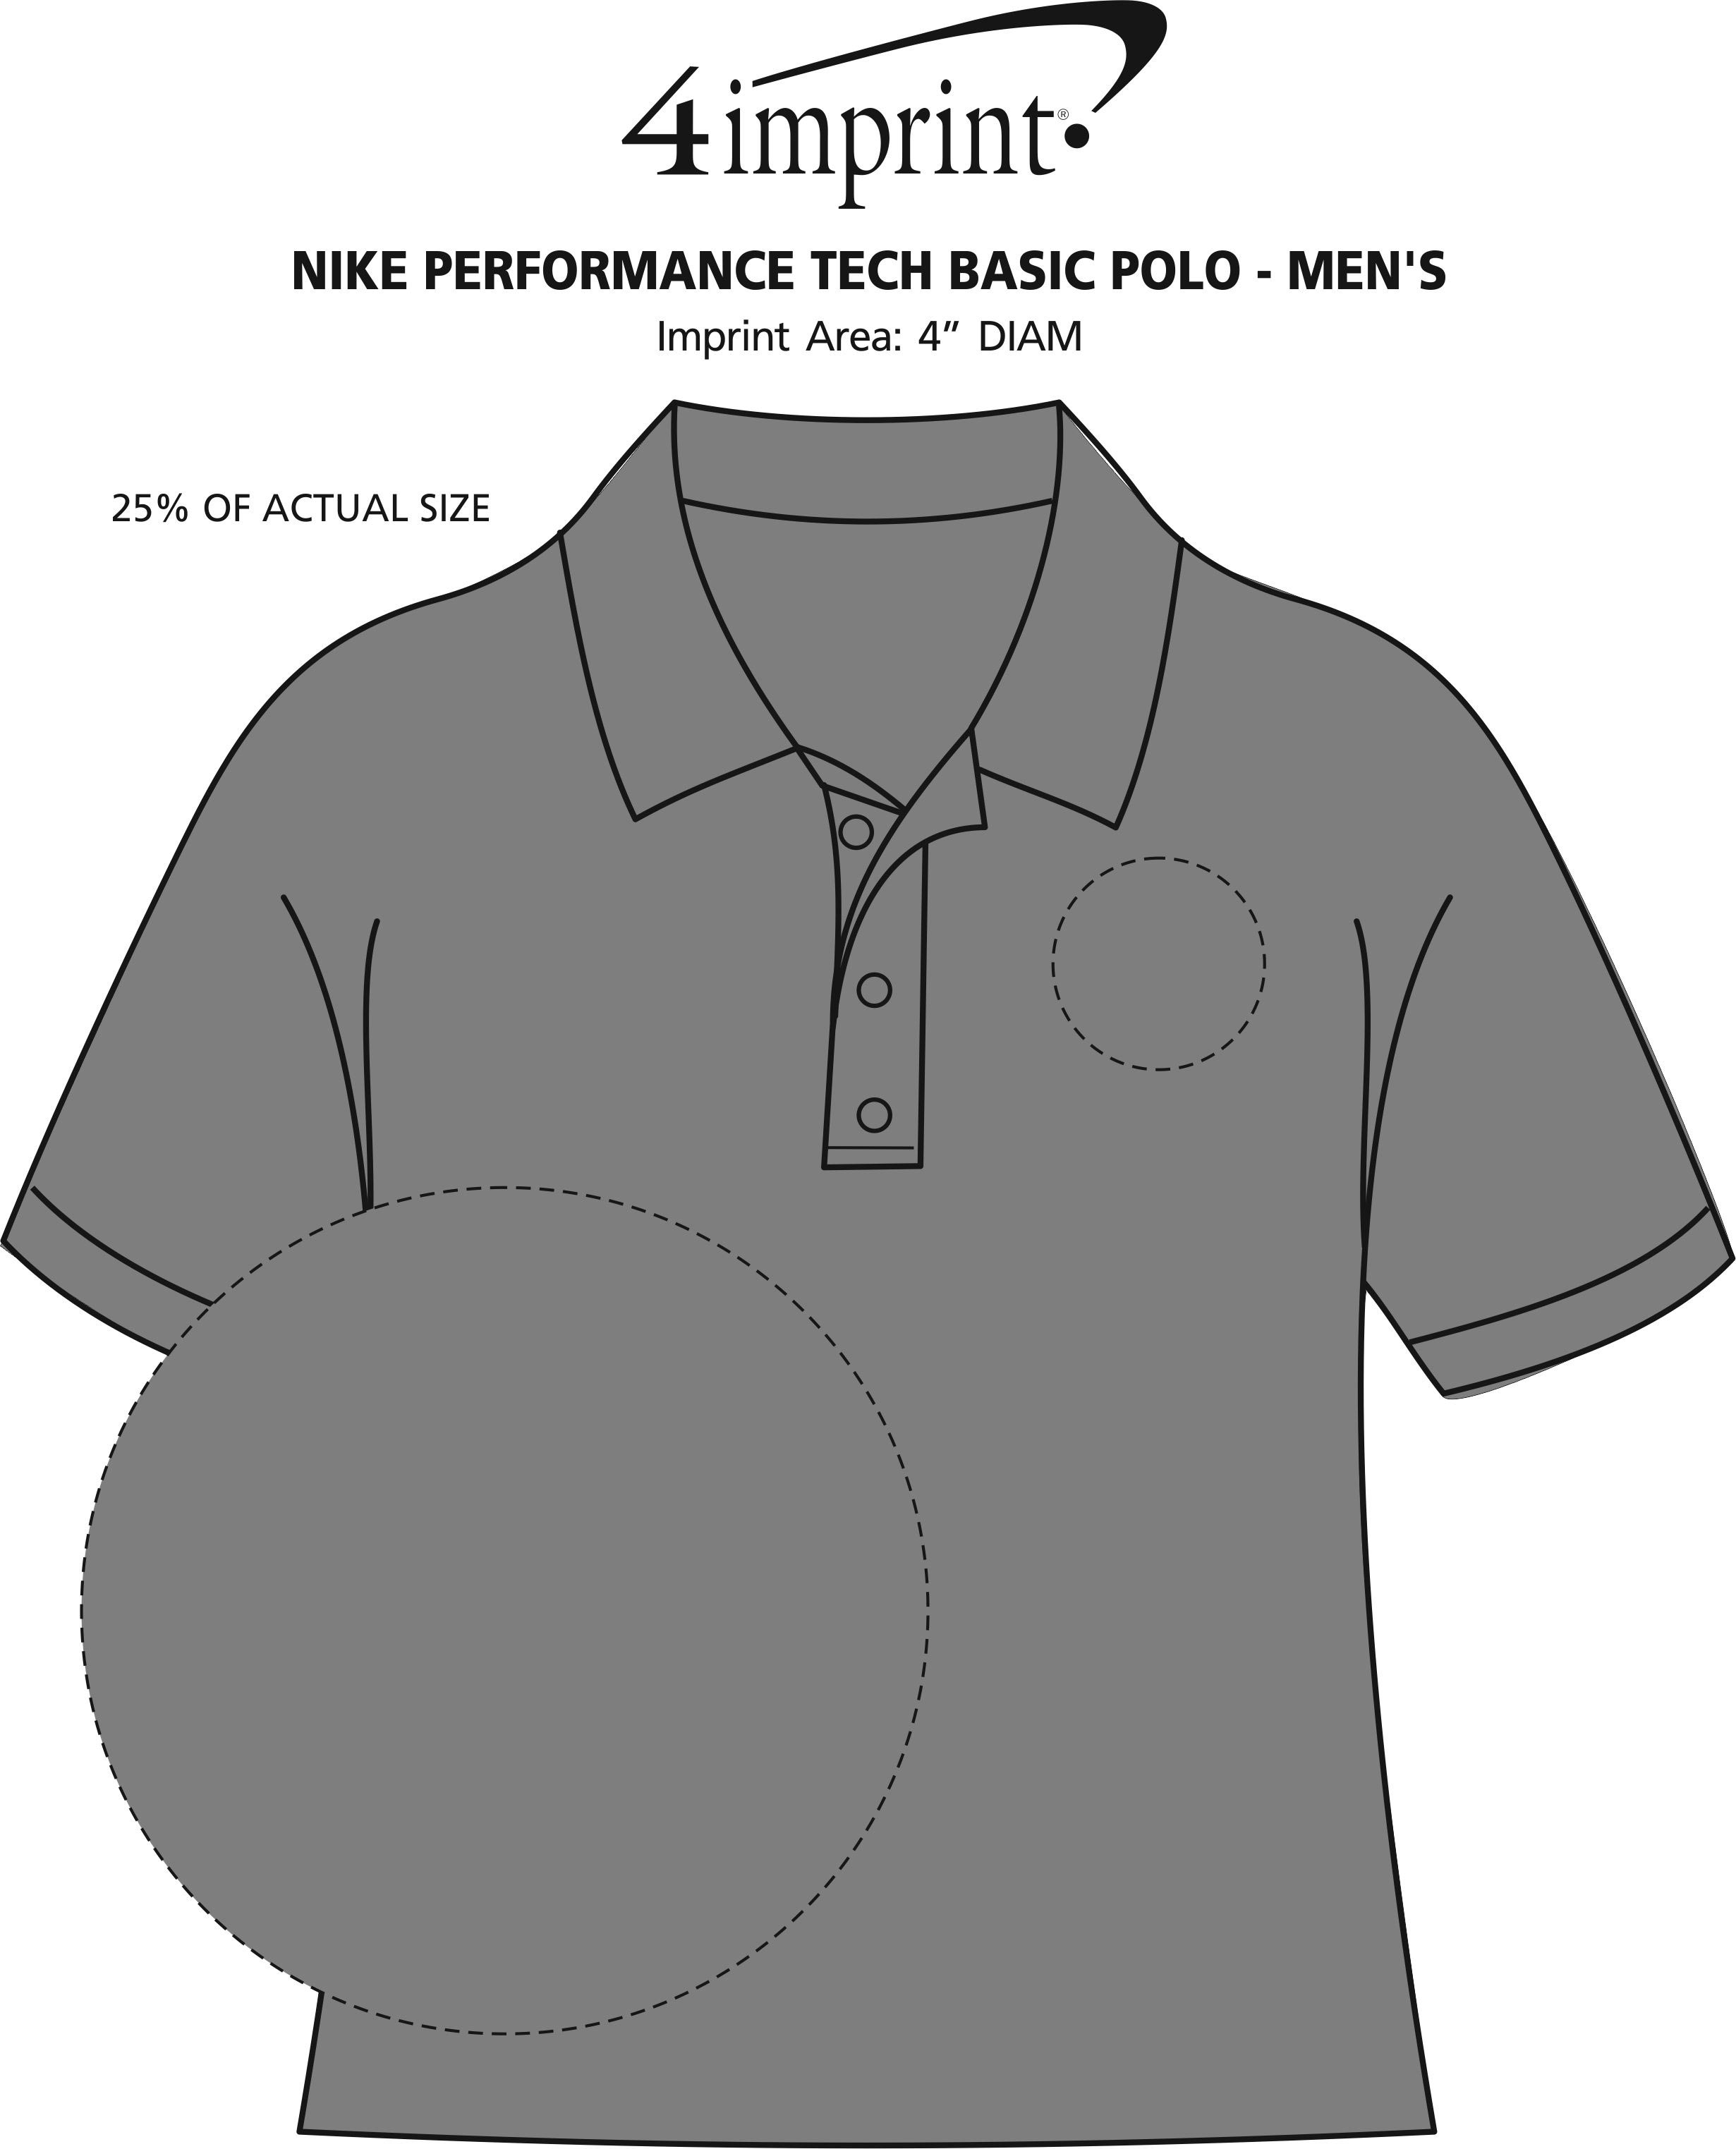 Imprint Area of Nike Performance Tech Basic Polo - Men's